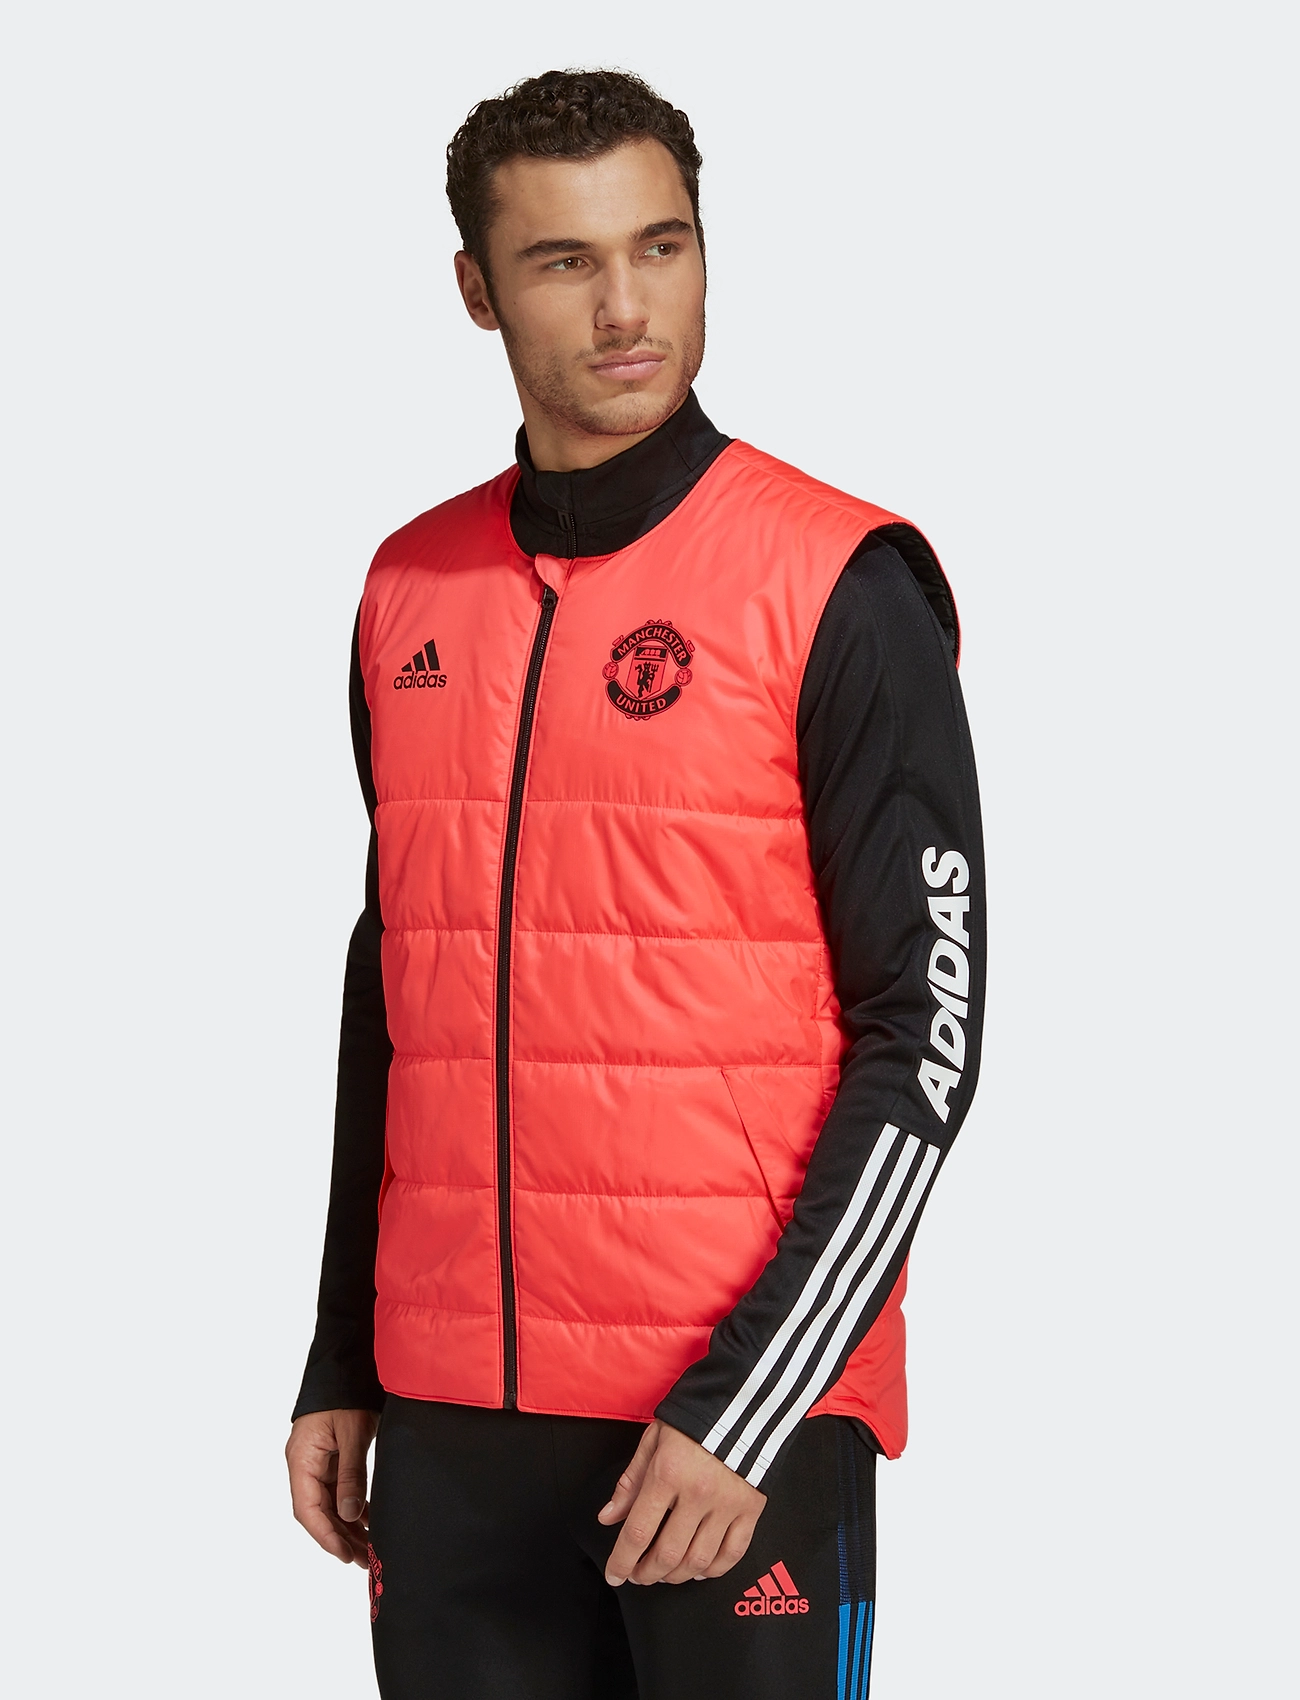 202021 Manchester United adidas Training Vest  NEW